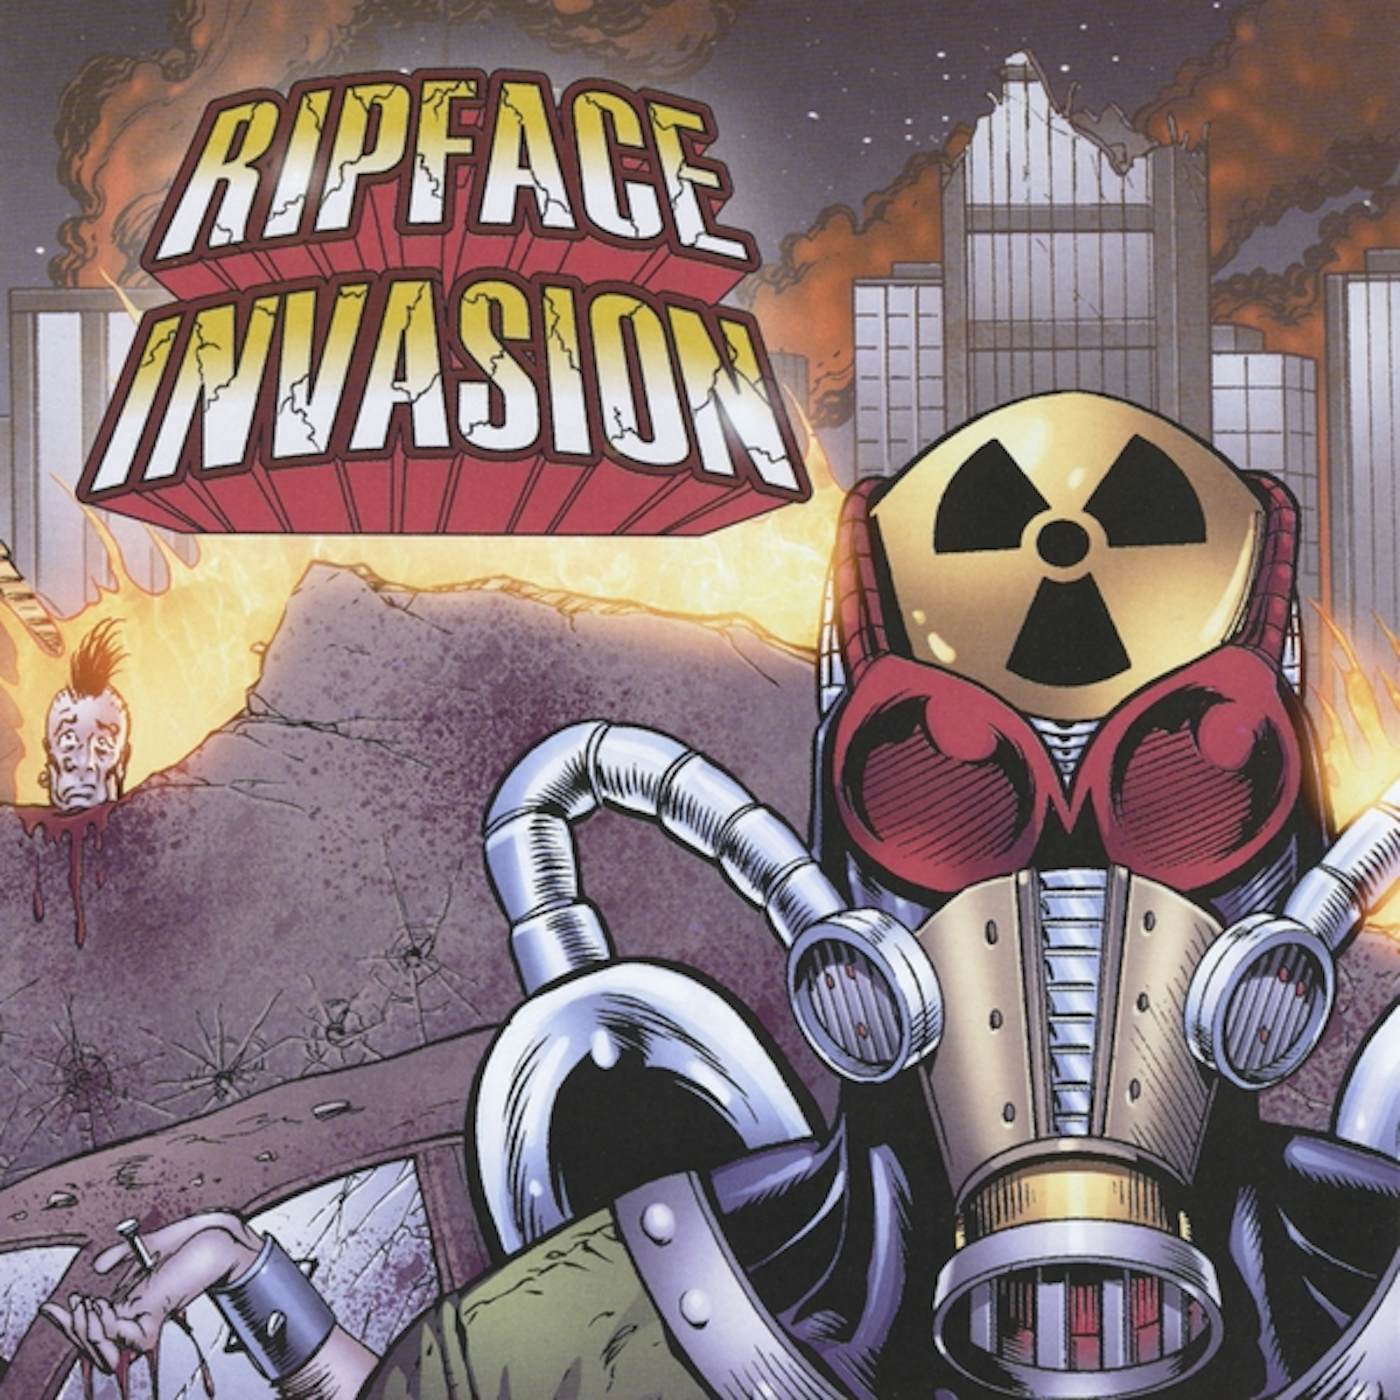 RIPFACE INVASION CD